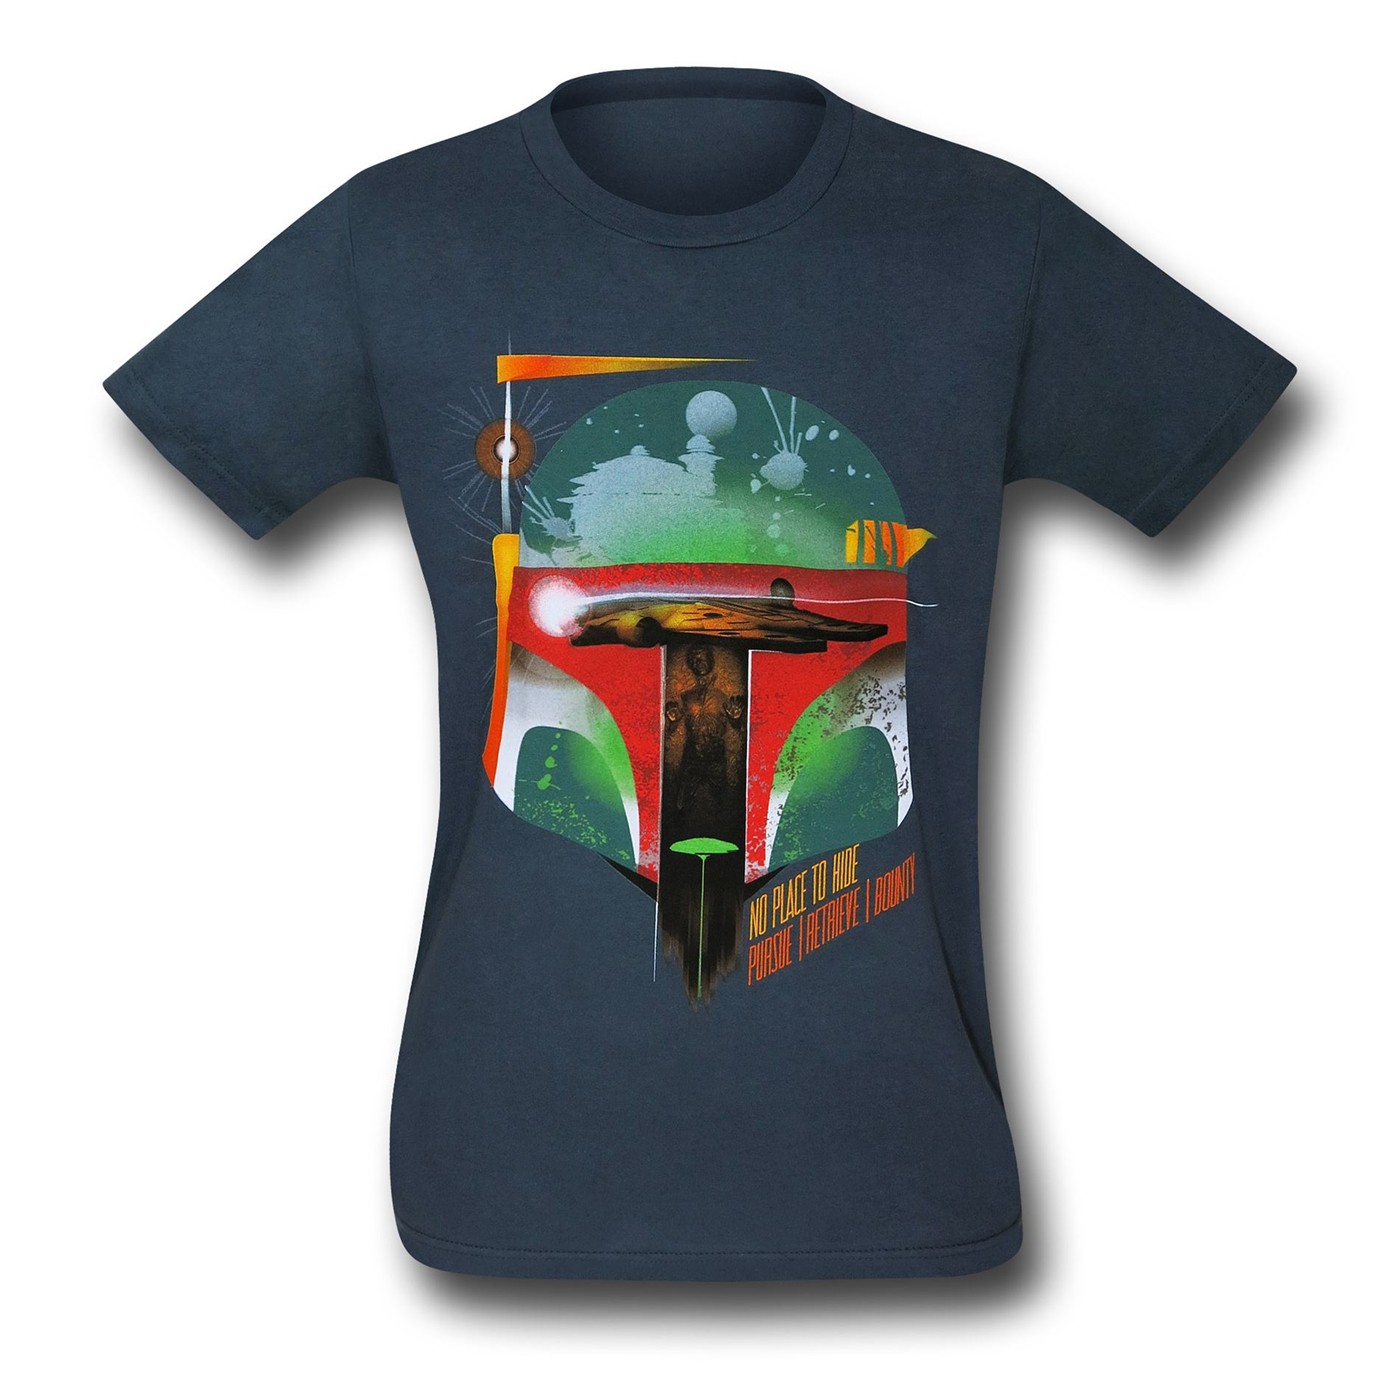 Star Wars Boba Fett Can't Hide 30 Single T-Shirt